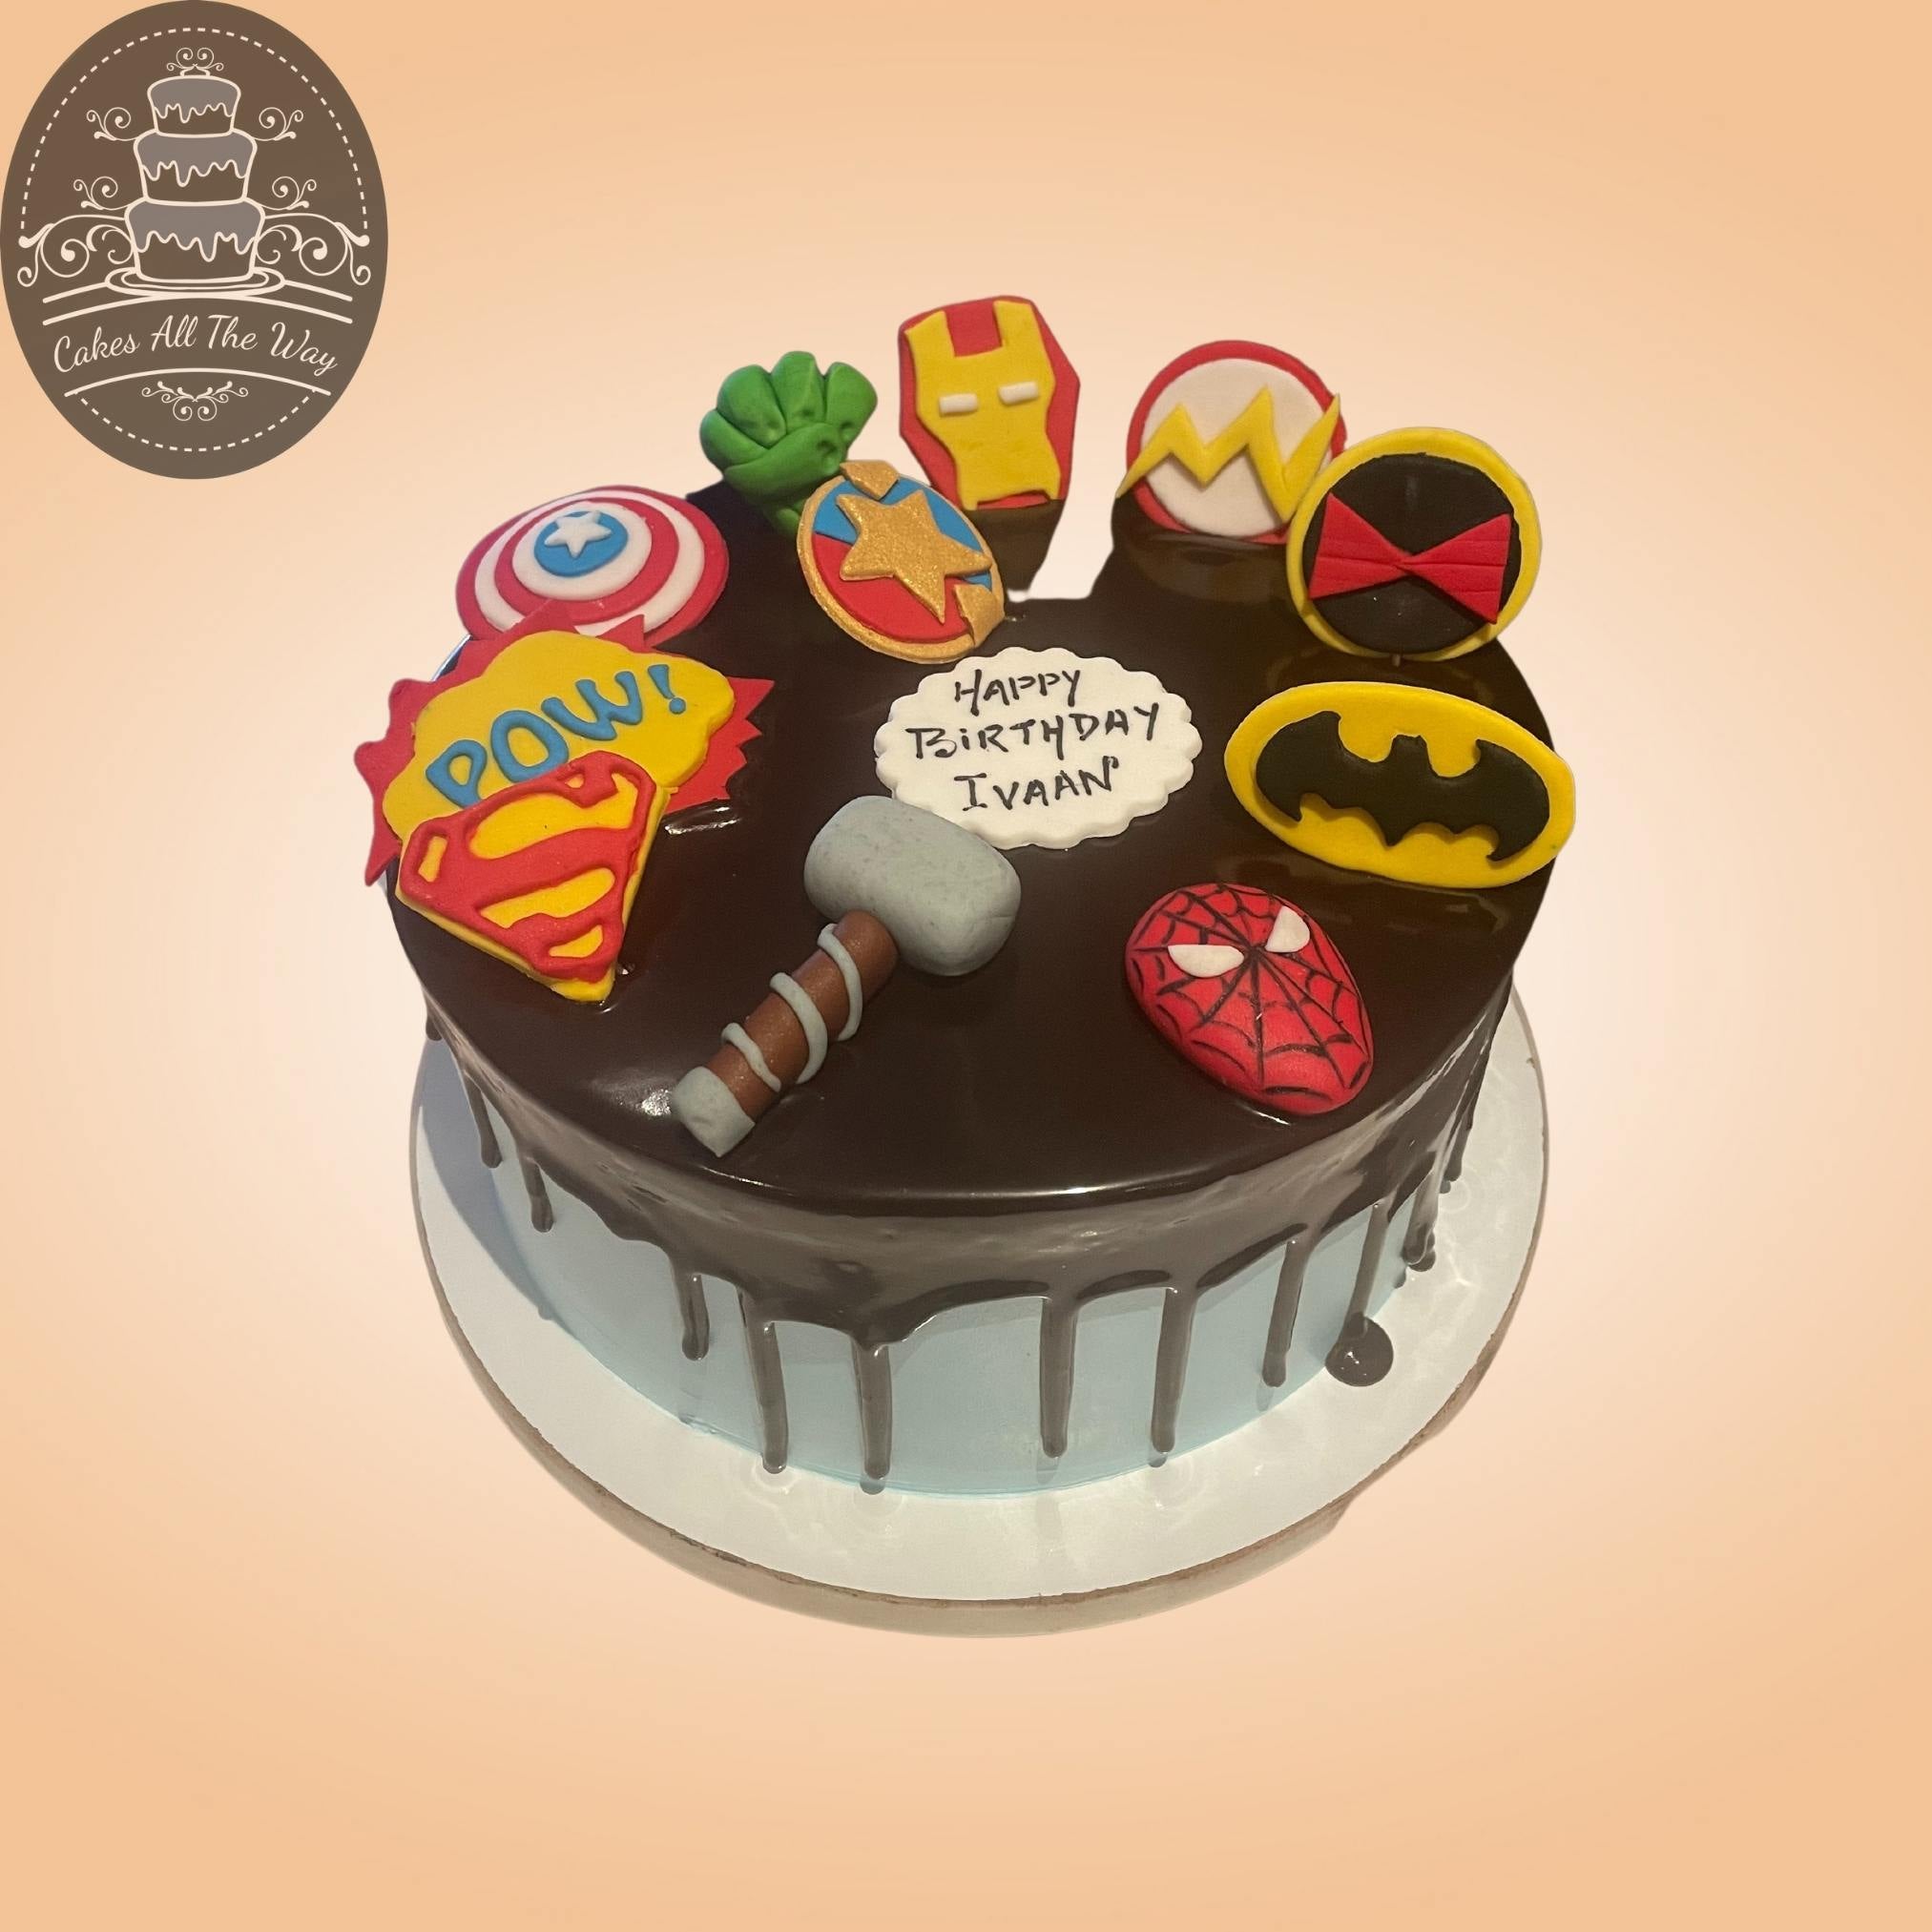 3 Tier Mini 3 Tier Marvel / Dc Superhero Birthday Cake - CakeCentral.com